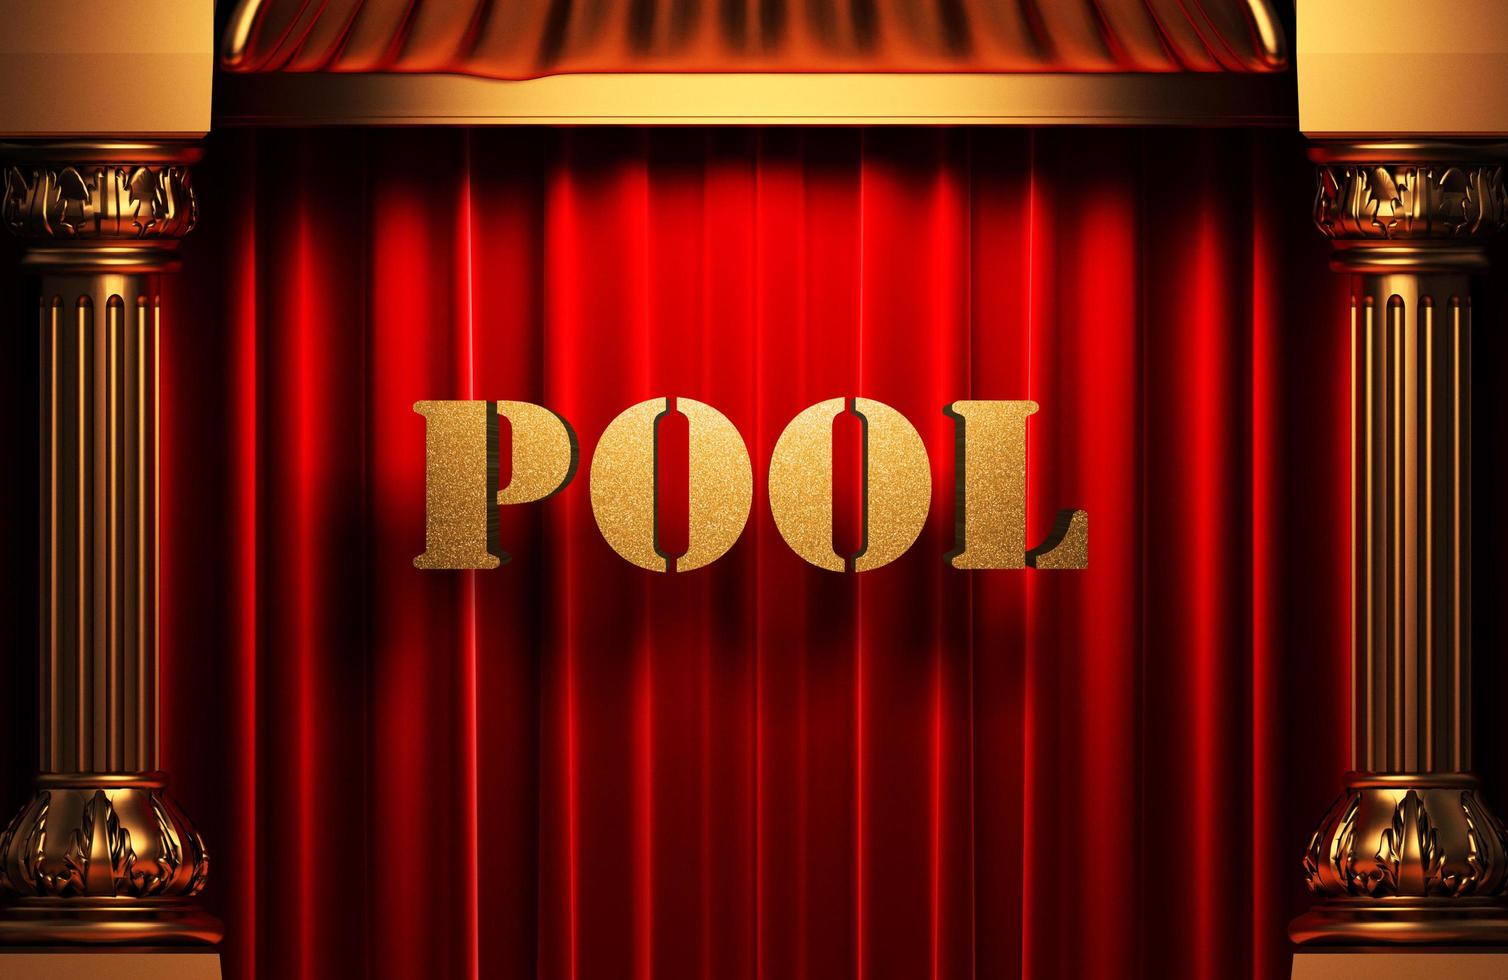 piscina palabra dorada en cortina roja foto